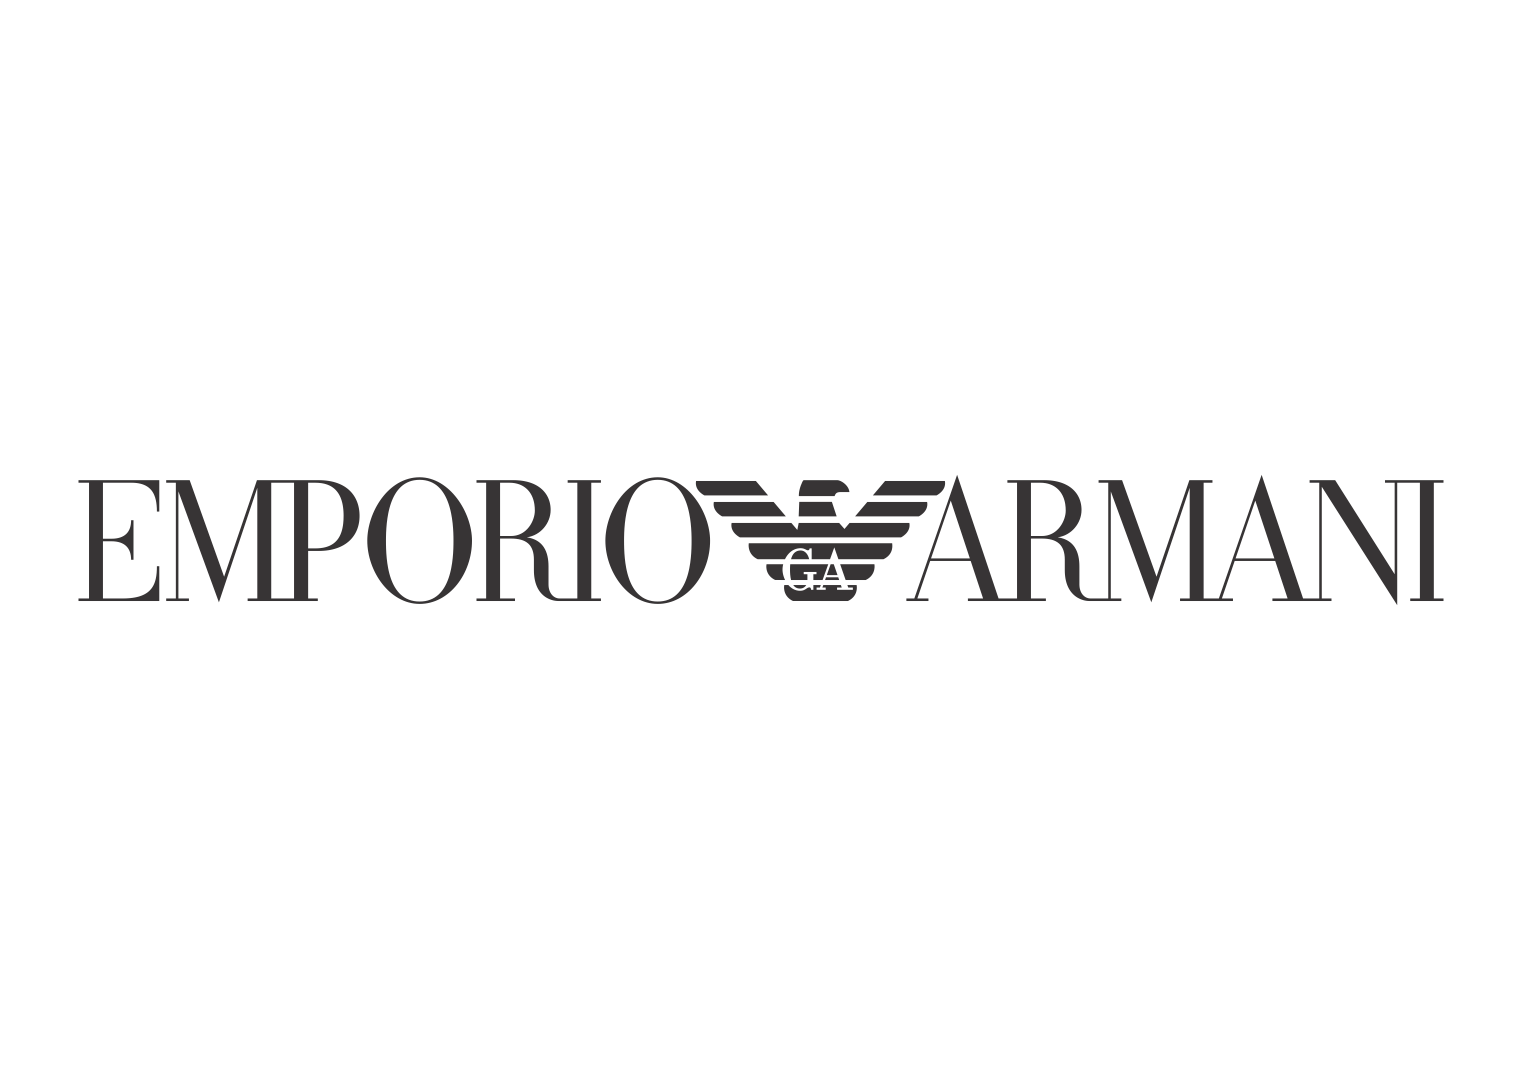 Armani Logo - emporio-armani-logo-vector - CUTE NYC | Video and Photo Production ...